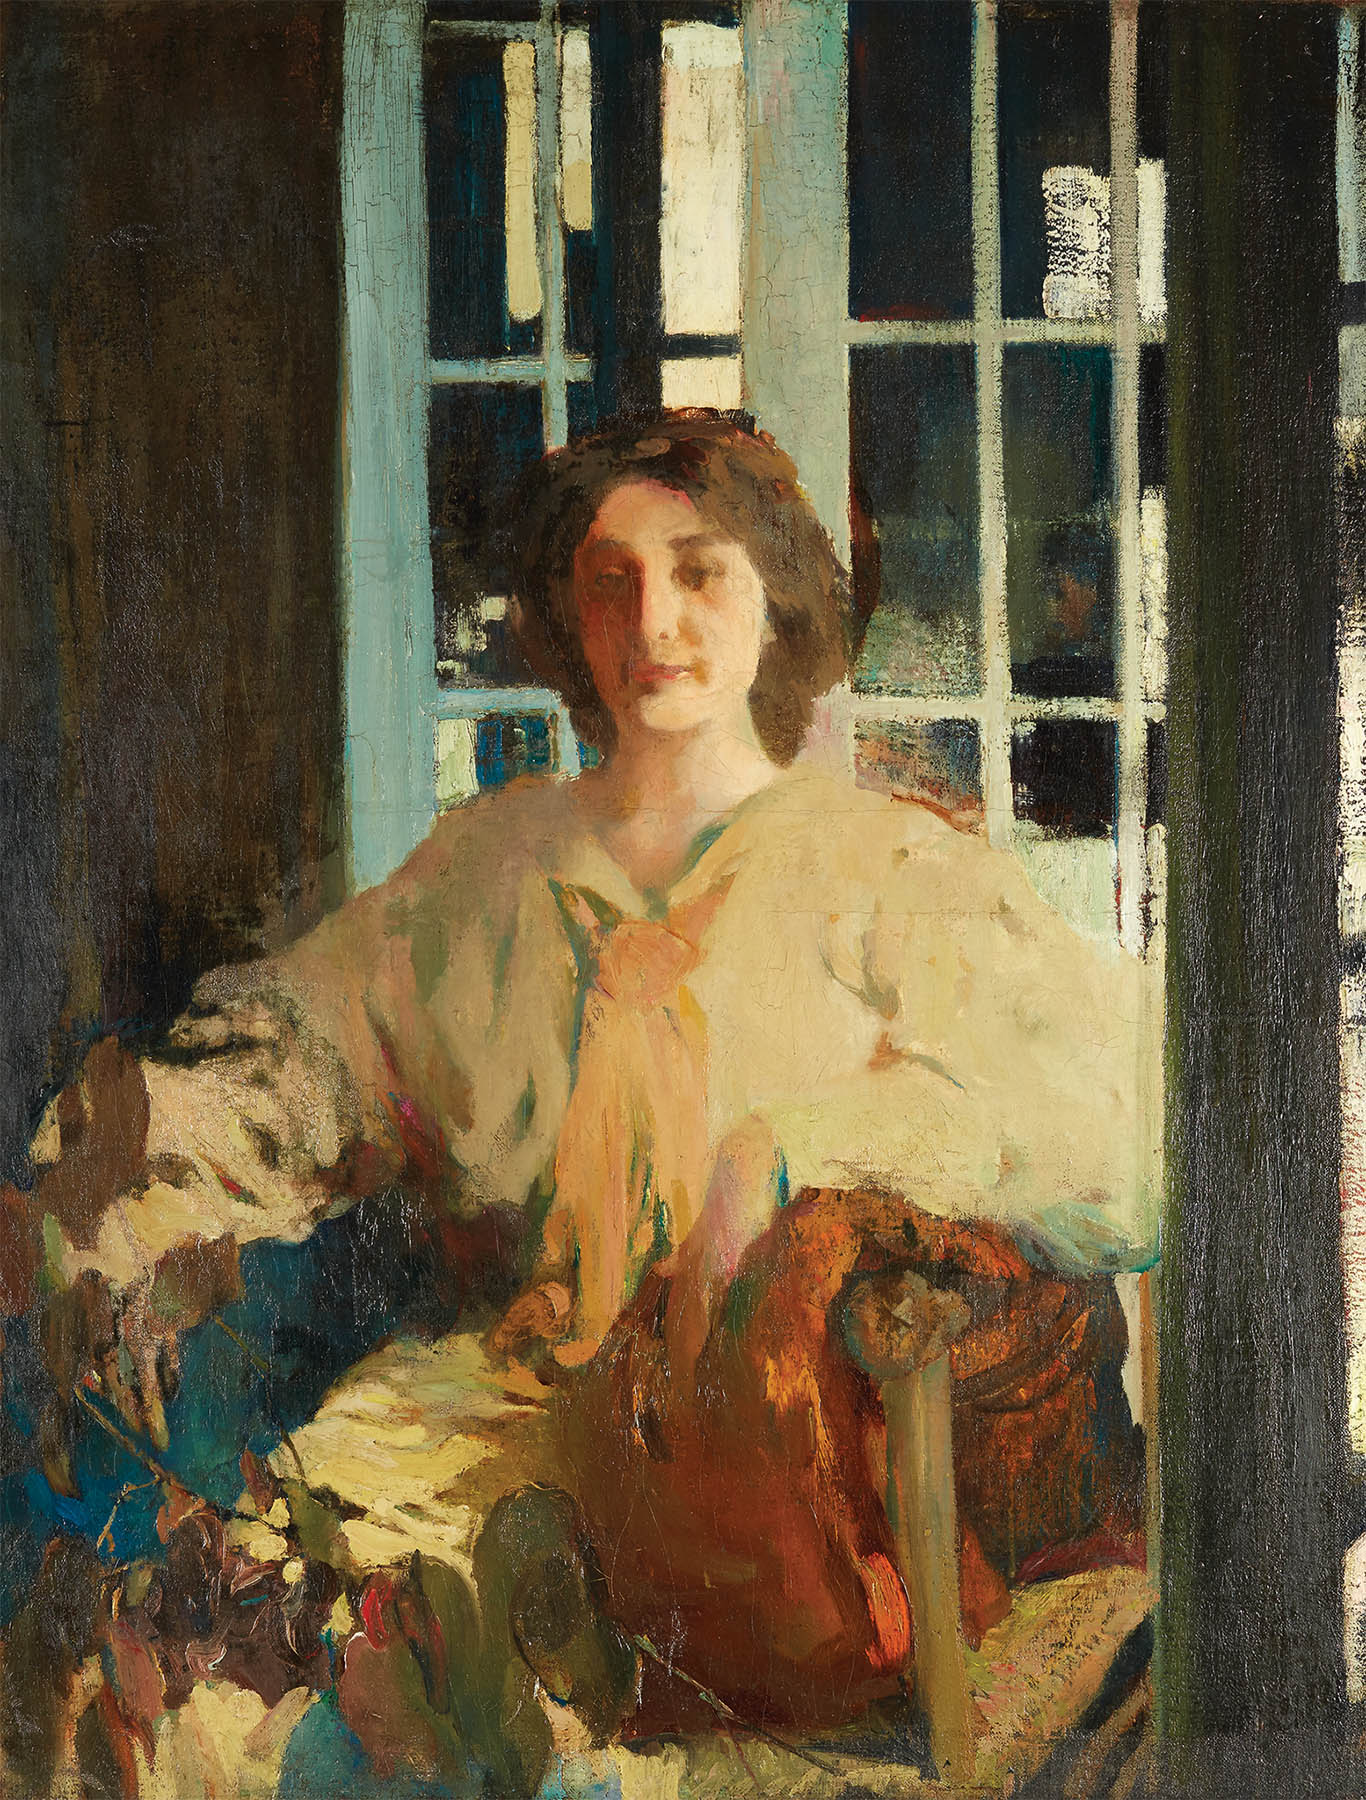 Lot 29 | Arthur Beecher Carles (American 1882-1952), Mlle de C., oil on canvas-SOLD FOR $27,500